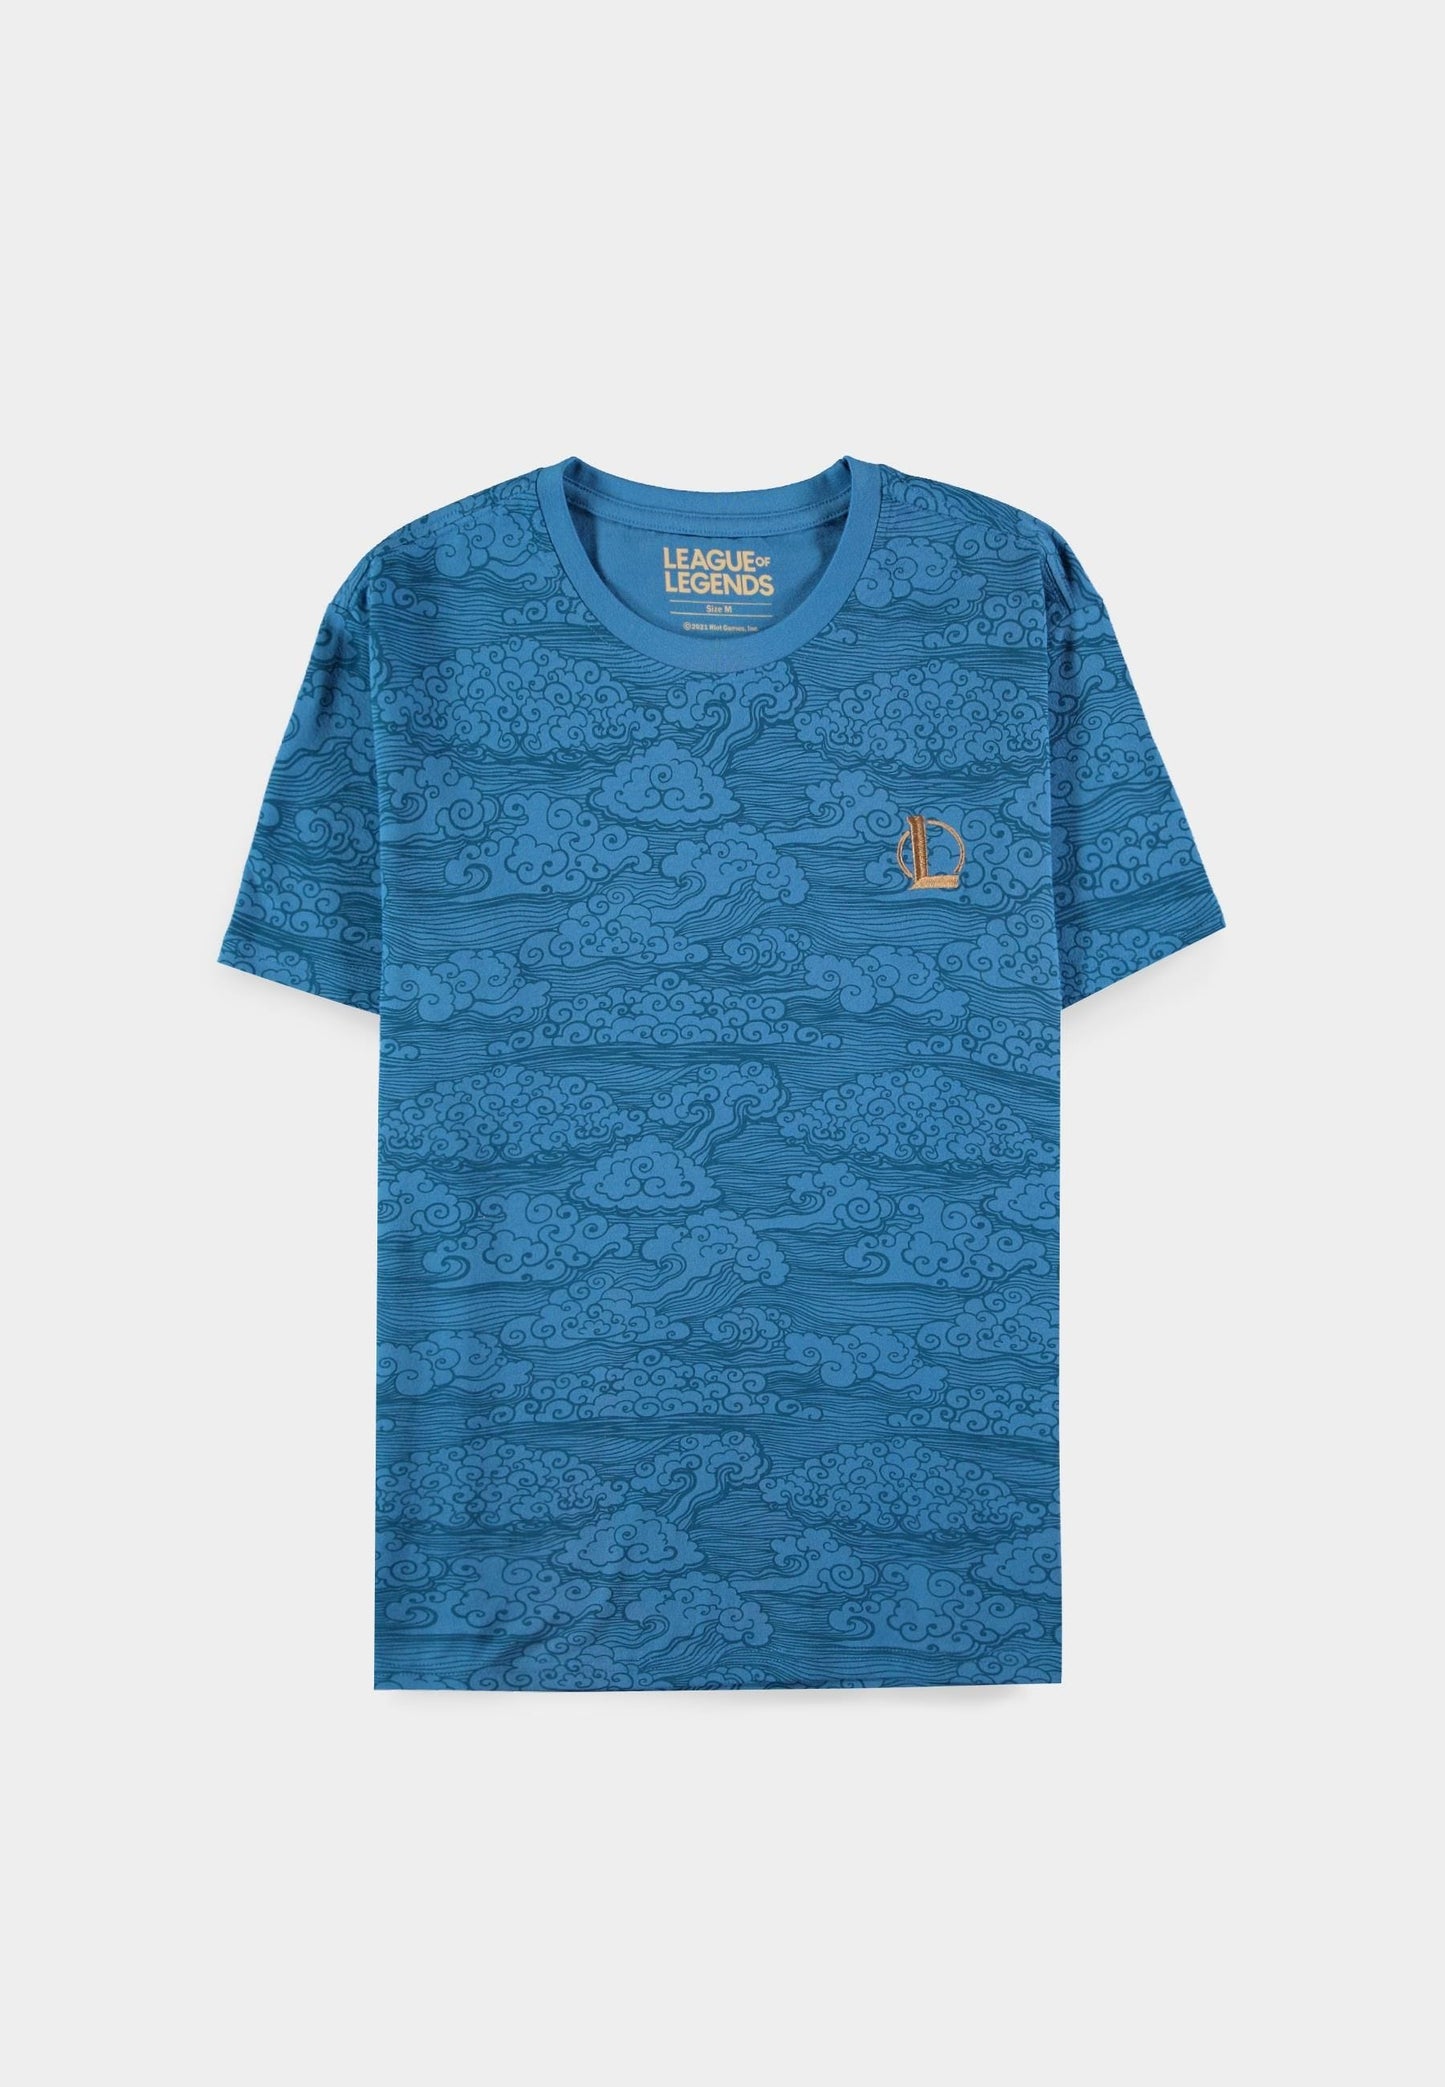 LEAGUE OF LEGENDS - Yasuo Men's Blue Short Sleeved T-shirt